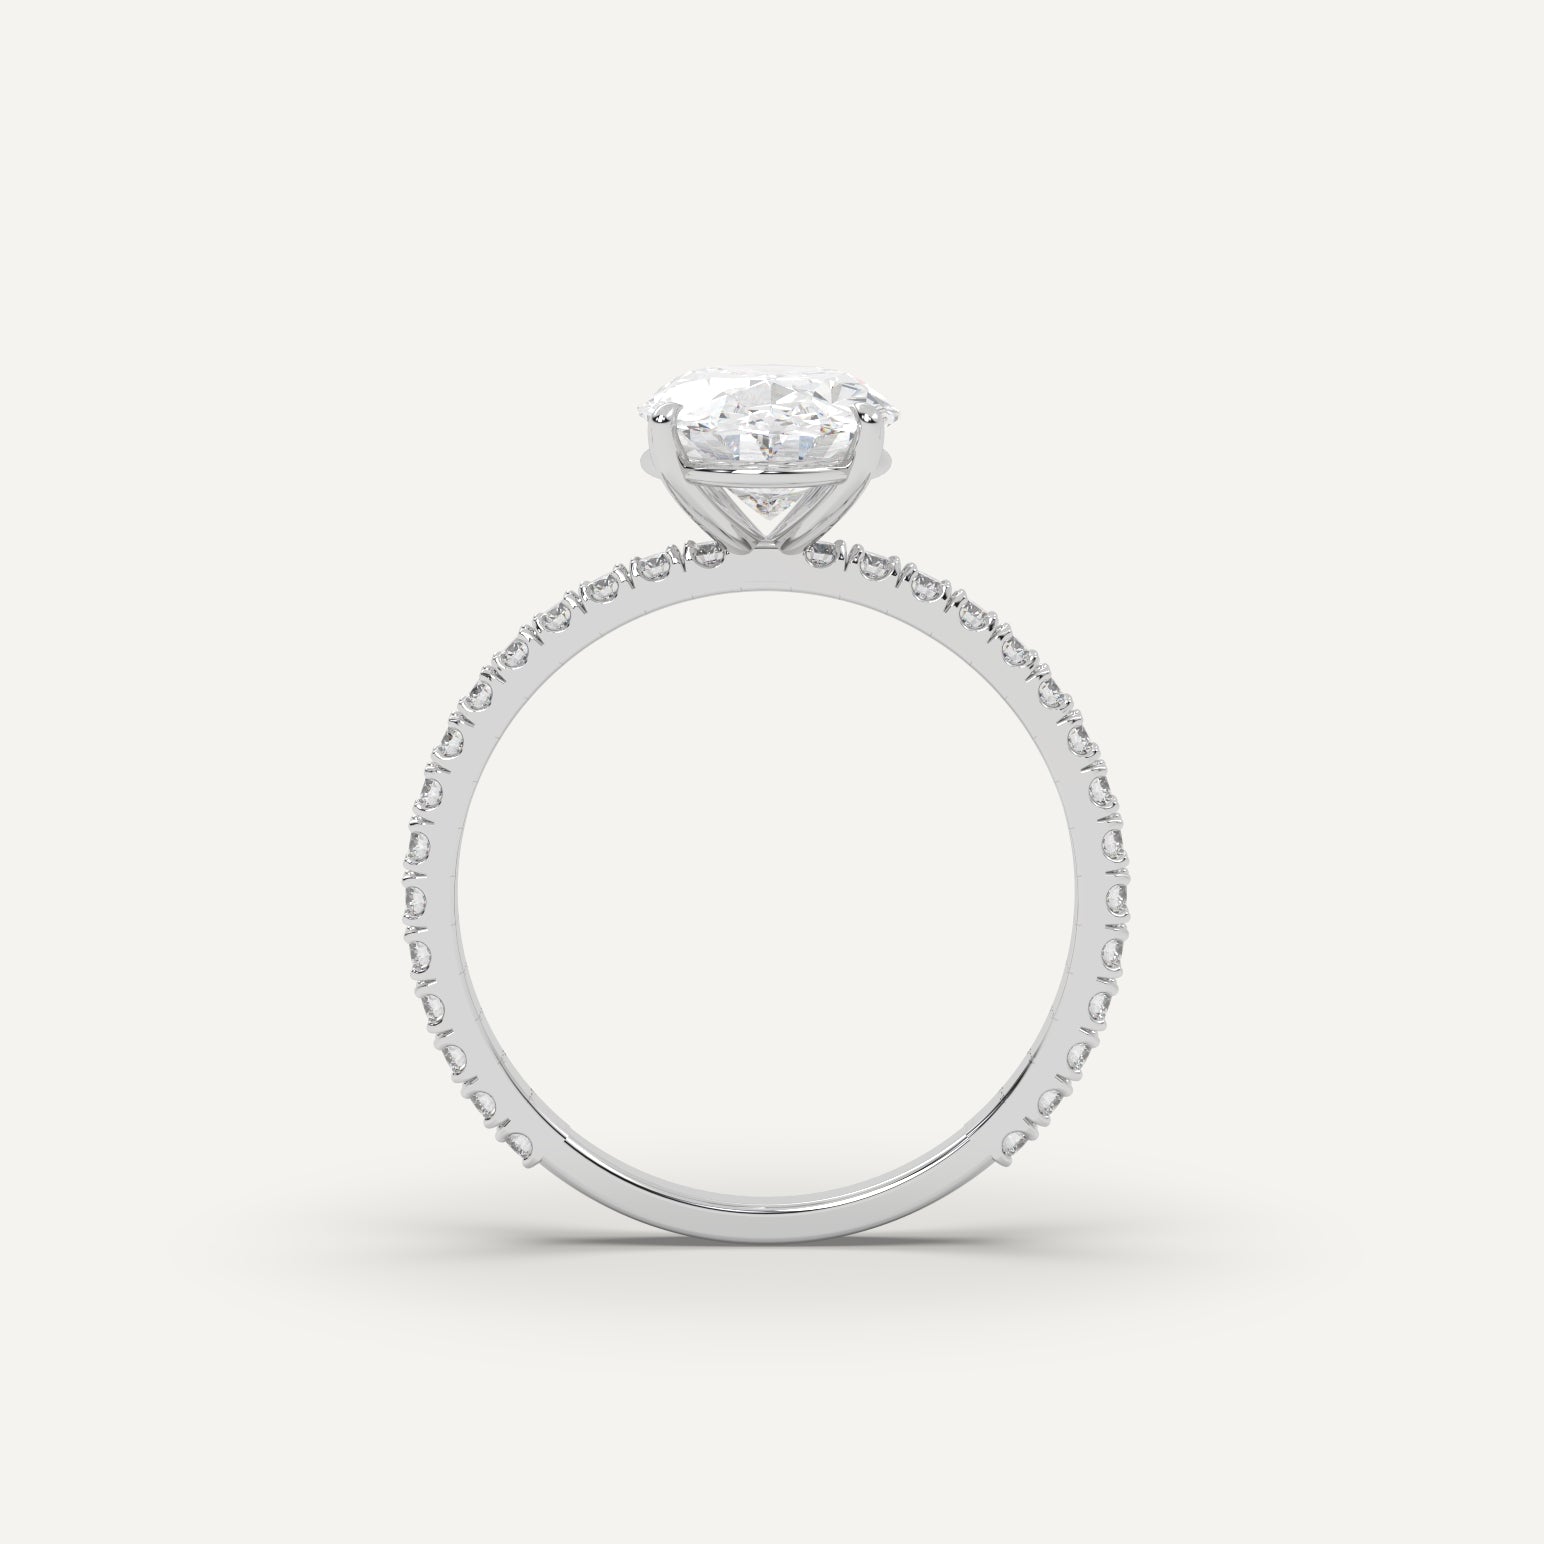 Oval Cut Diamond Engagement Ring - 2 carat